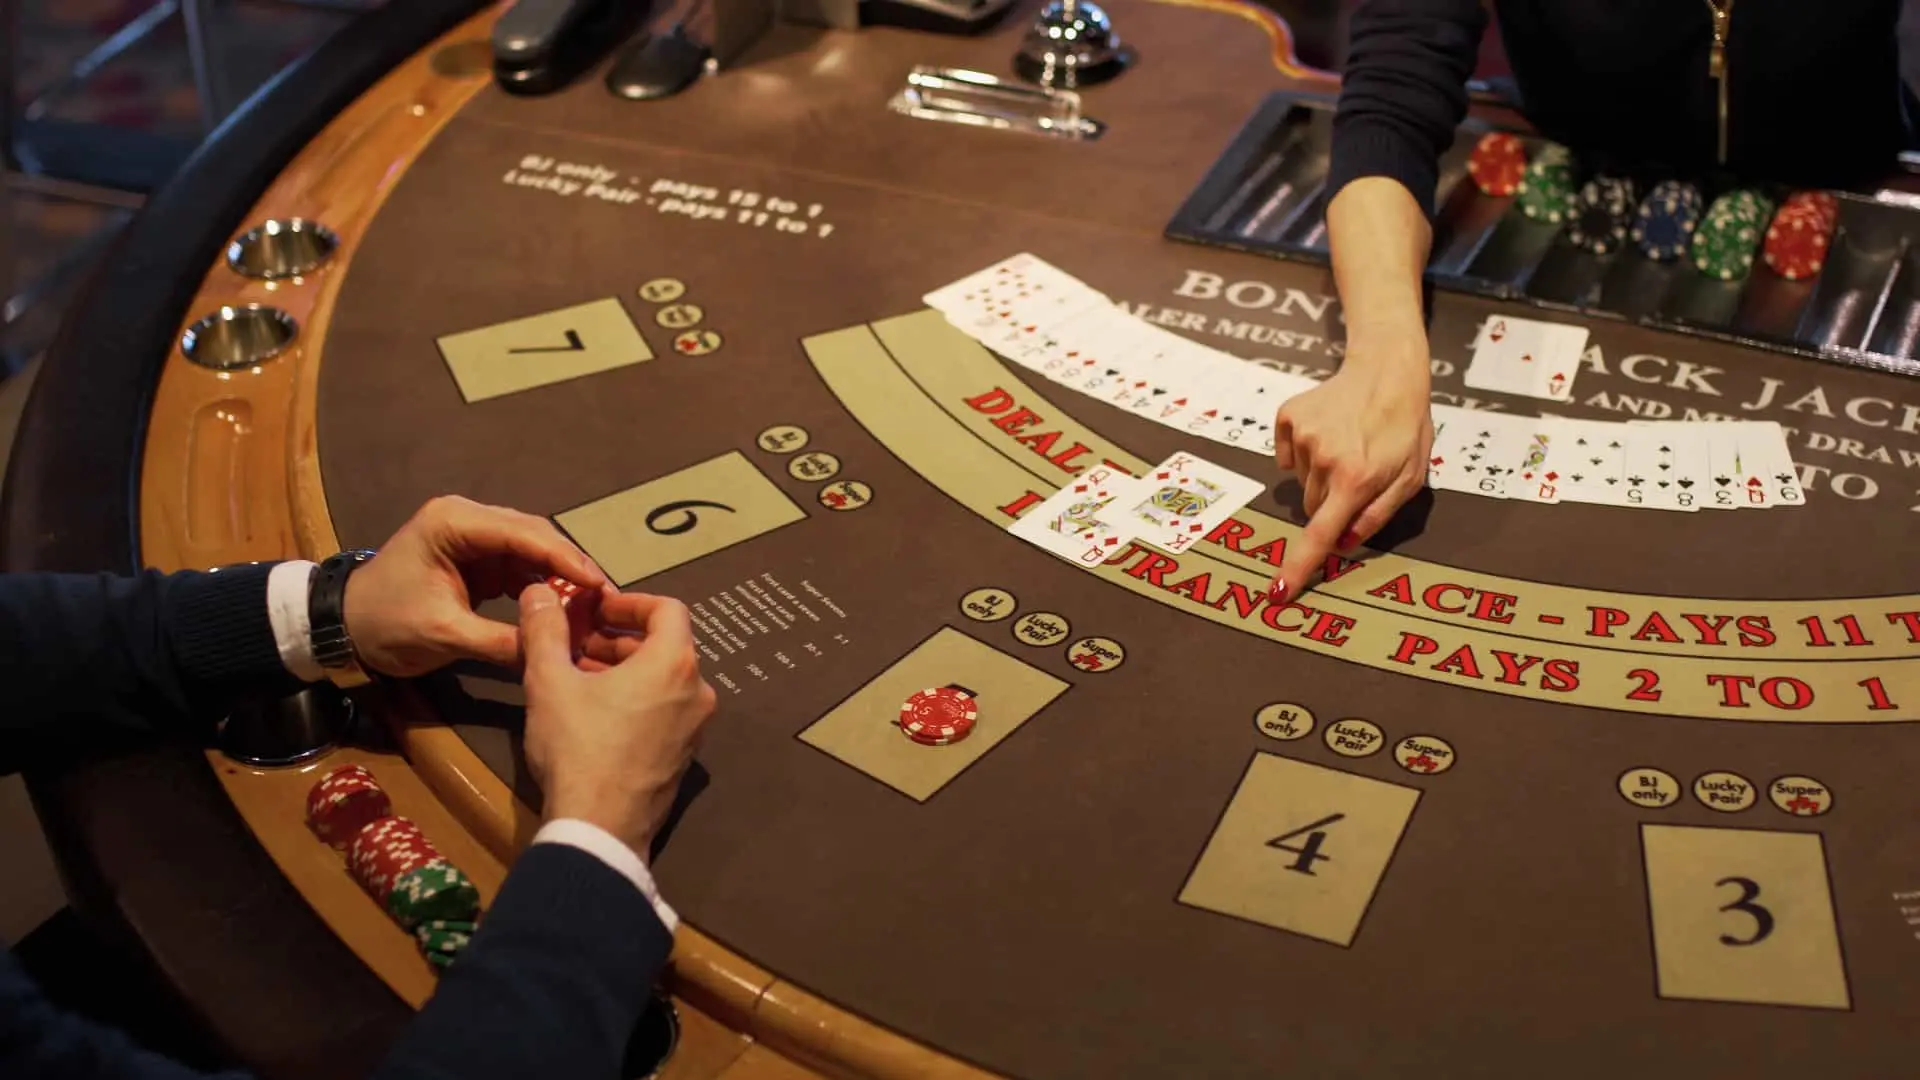 a professional gambler plays blackjack at a table